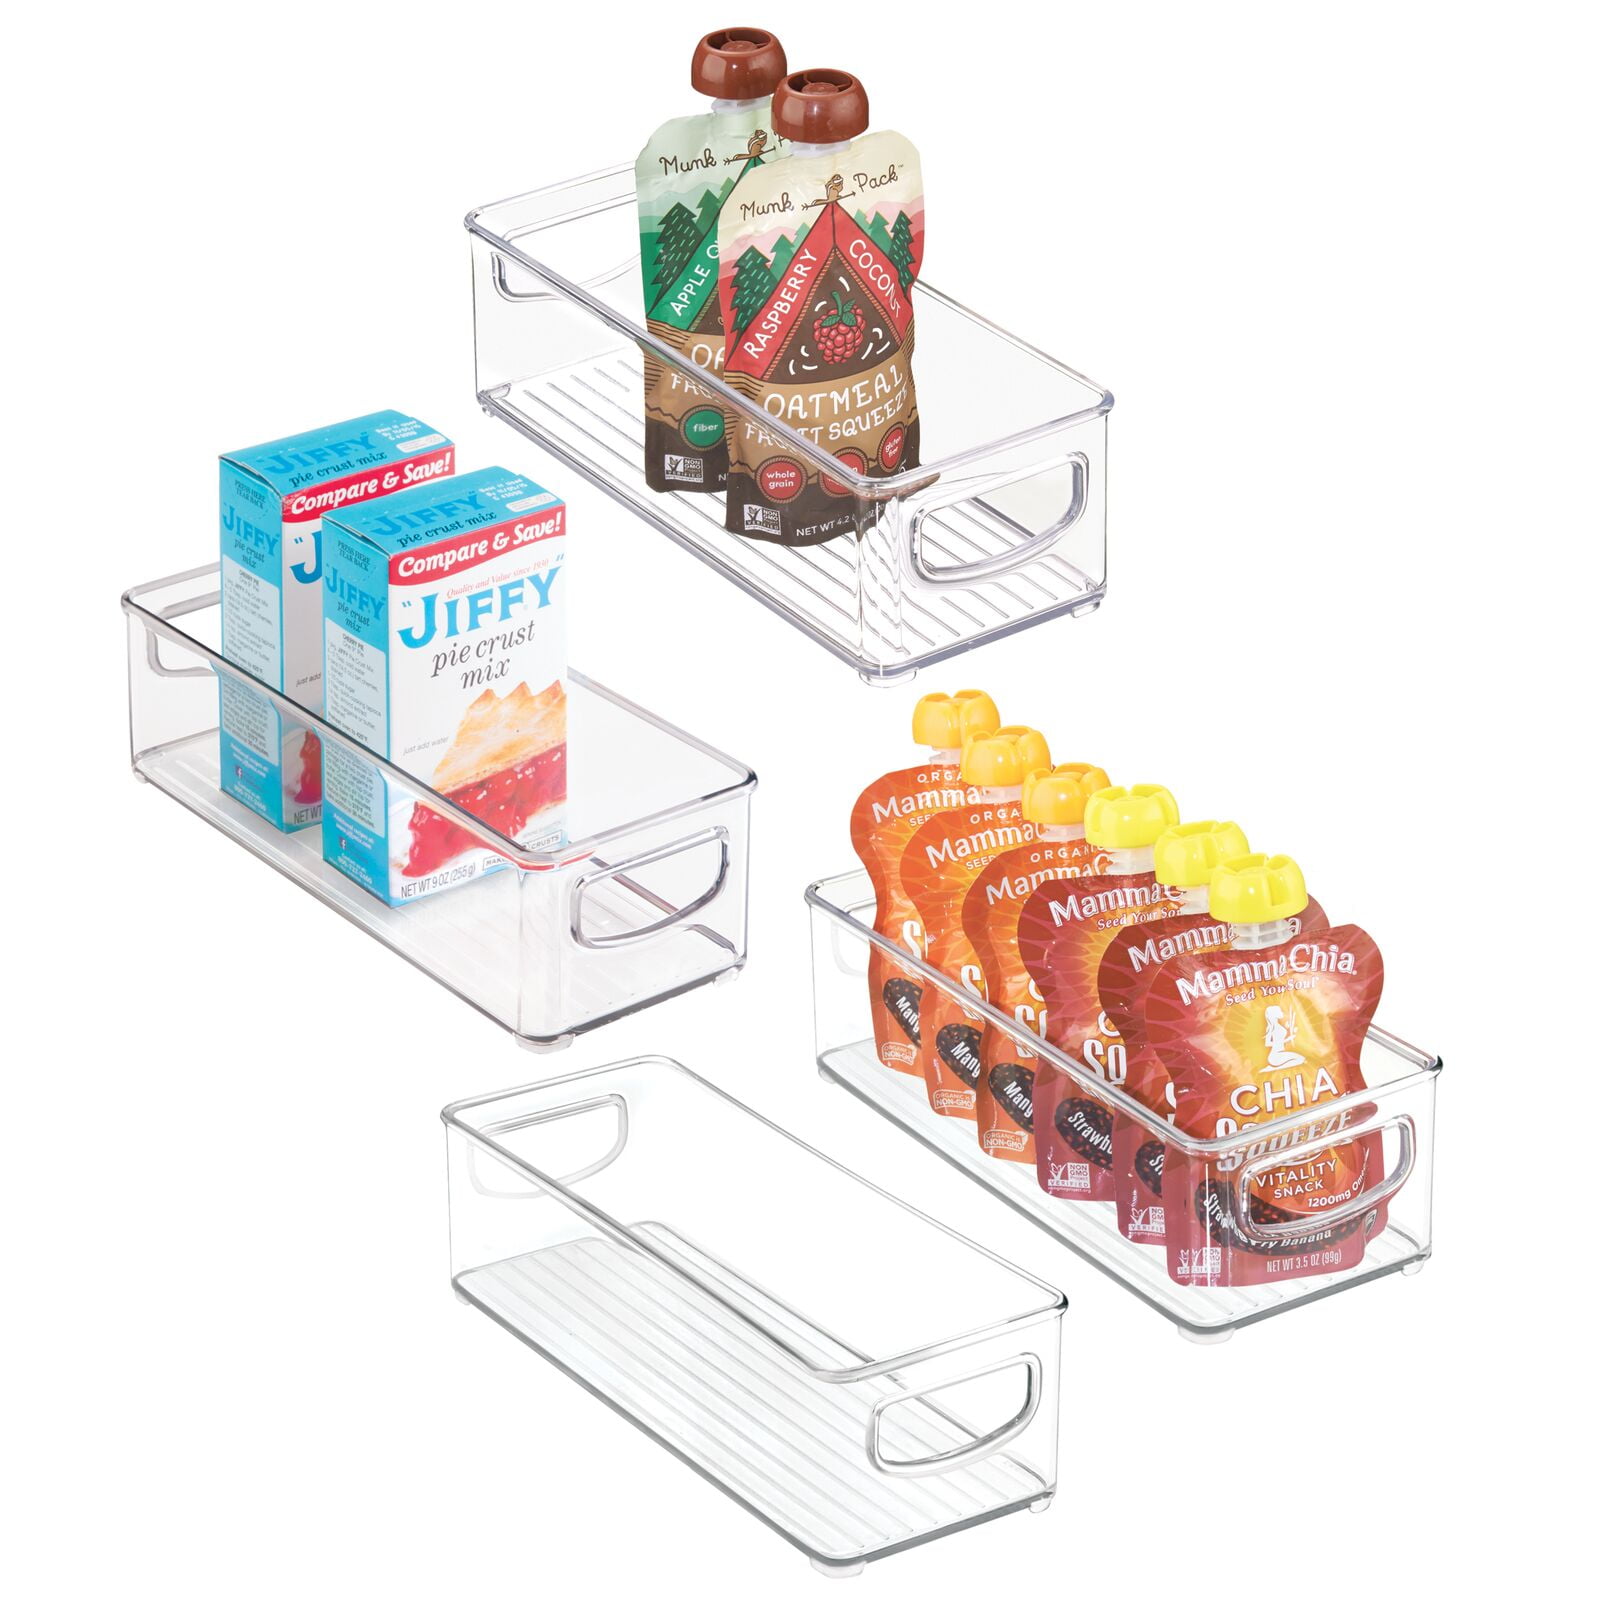 mDesign Tall Plastic Kitchen Food Storage Organizer Bin with Handles - Clear